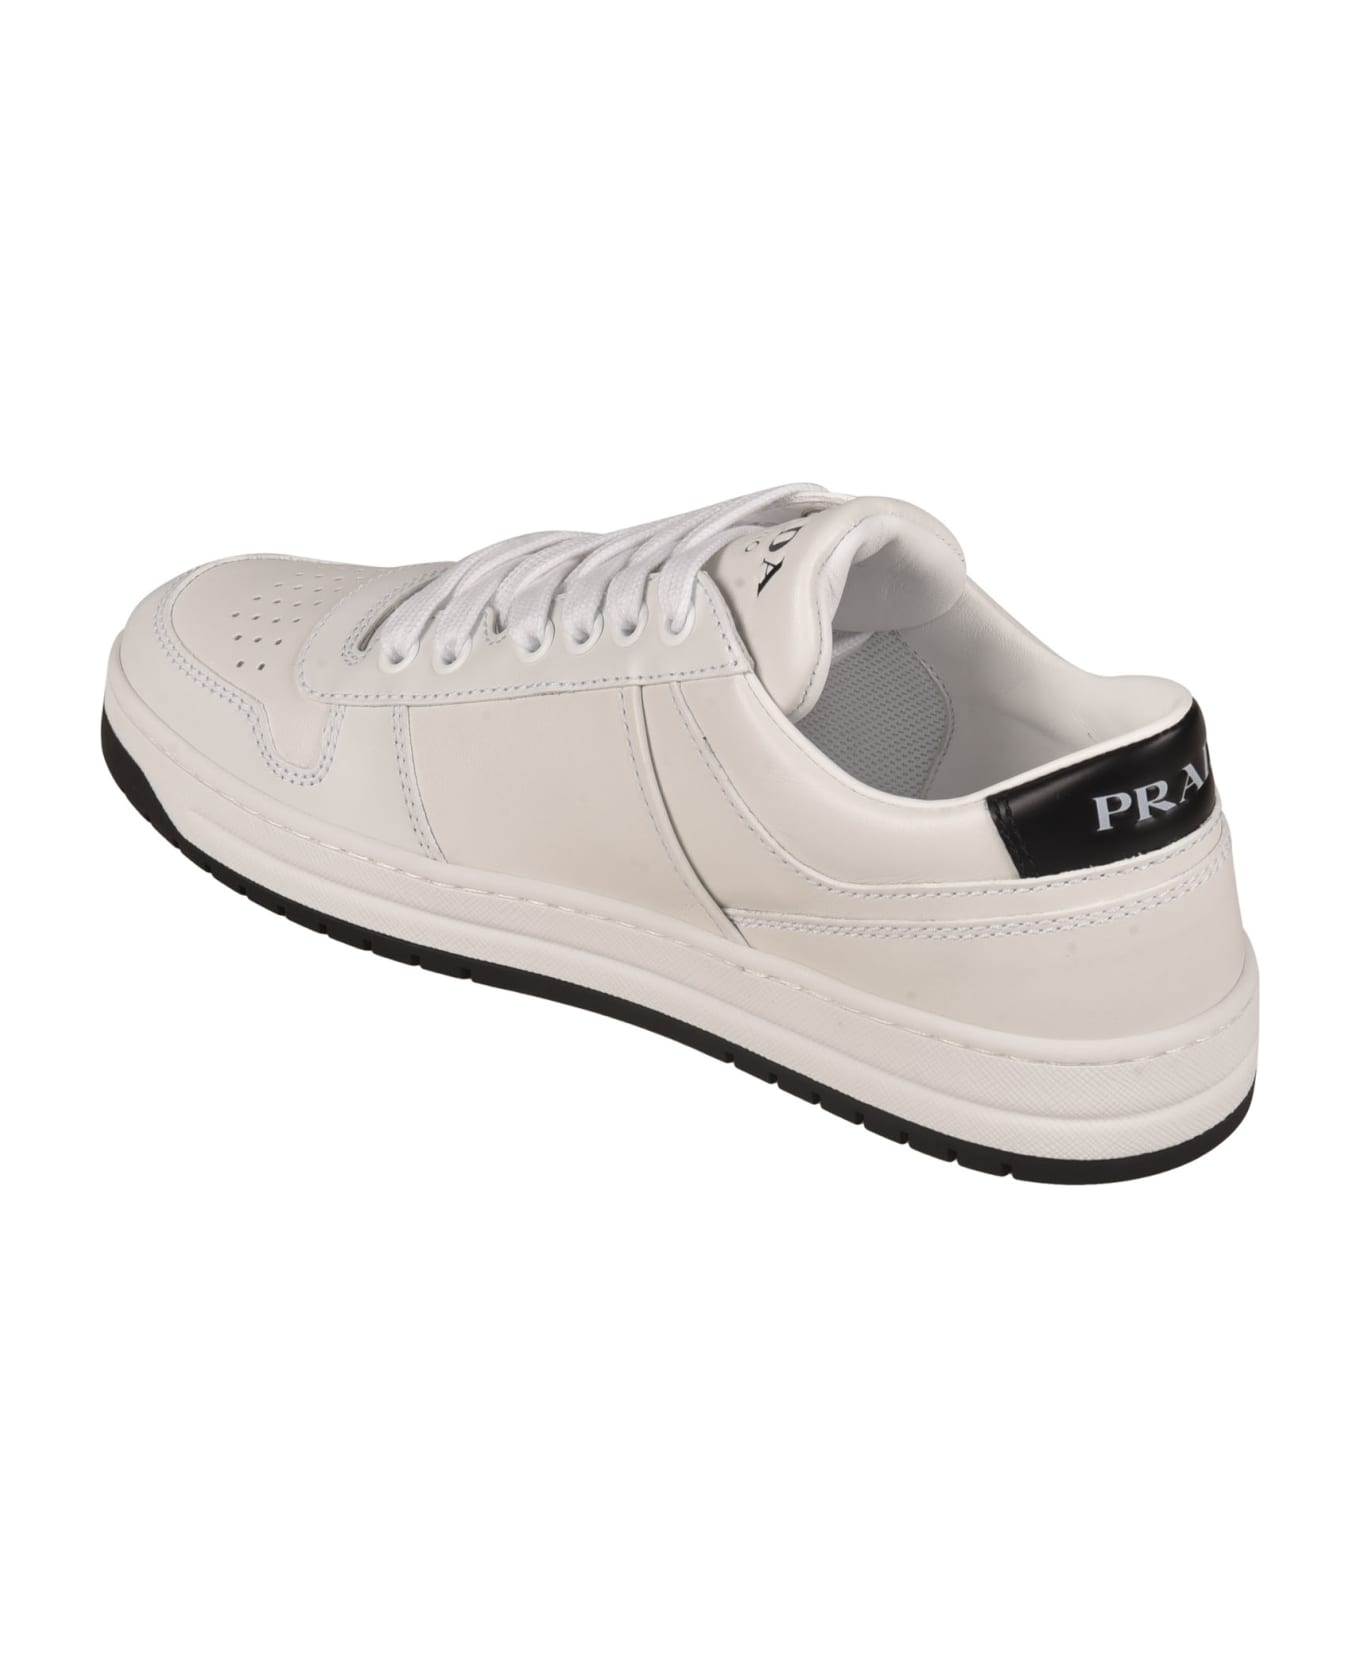 Prada Logo Plaque Perforated Sneakers - White/Black